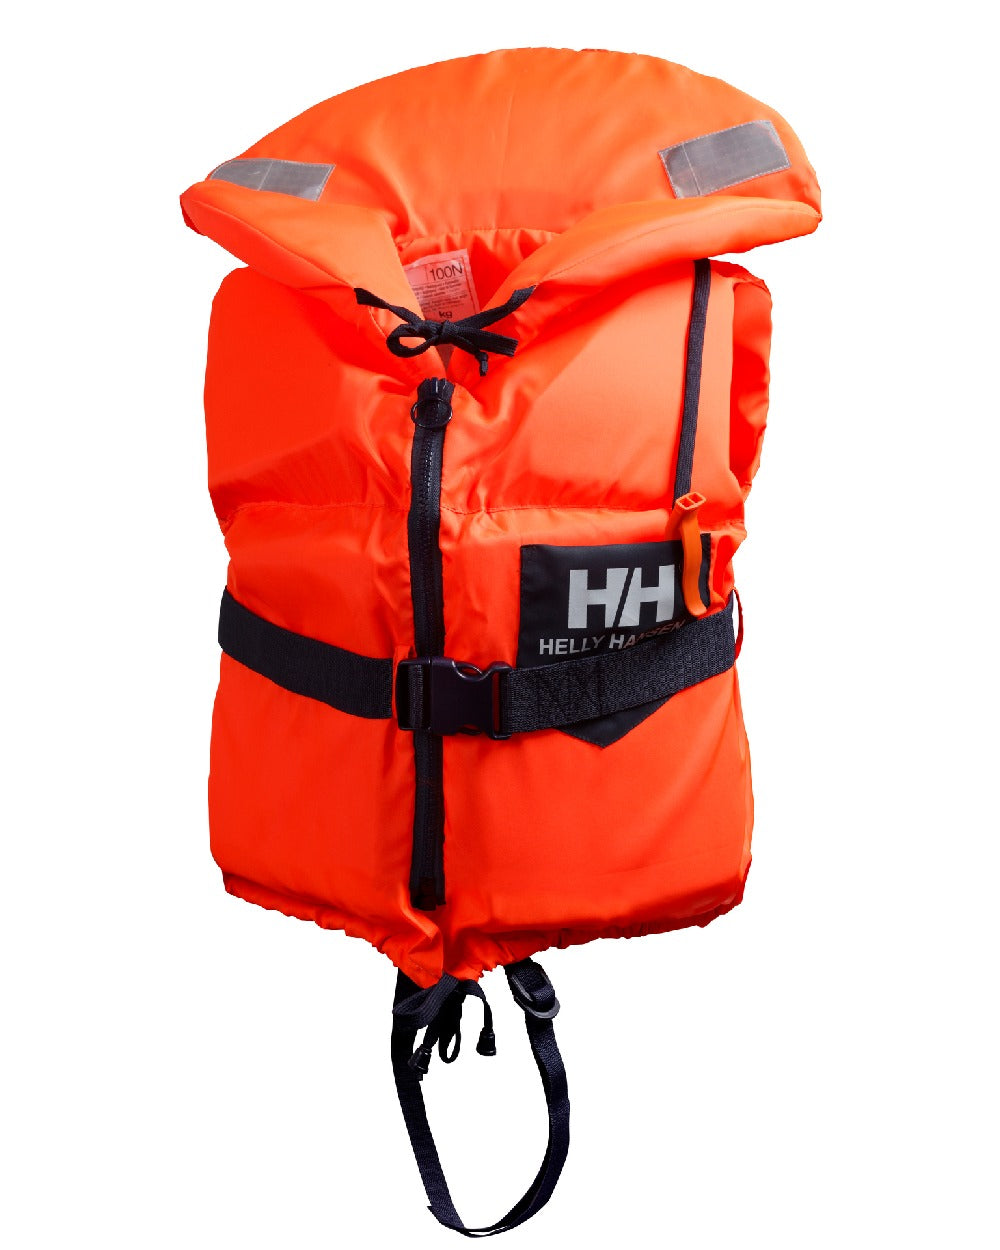 Fluor Orange coloured Helly Hansen Navigare Scan Life Jacket on white background 